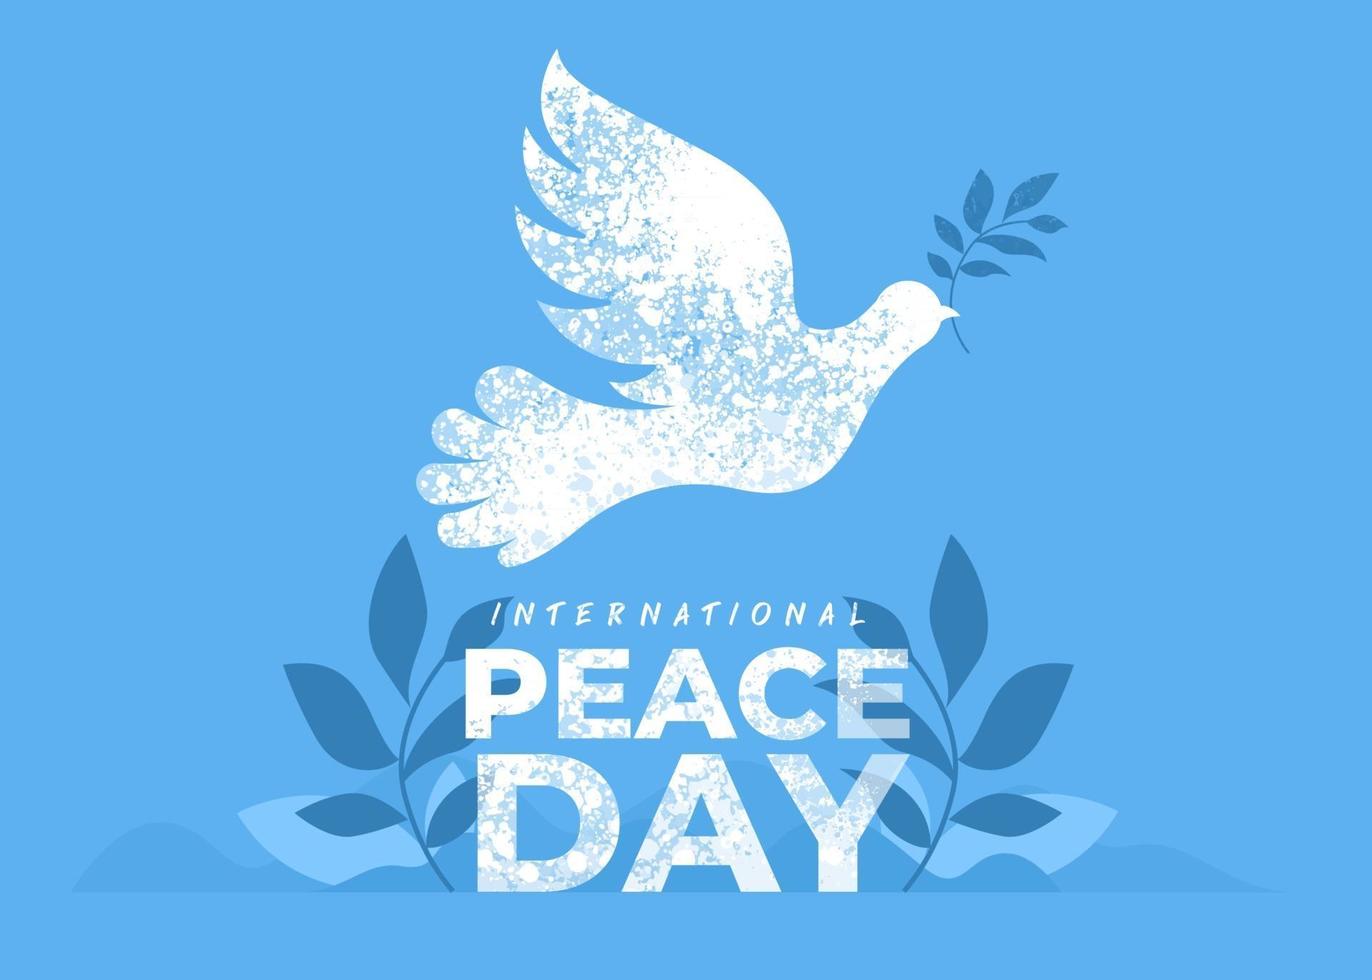 21 september, internationale vredesdag vector